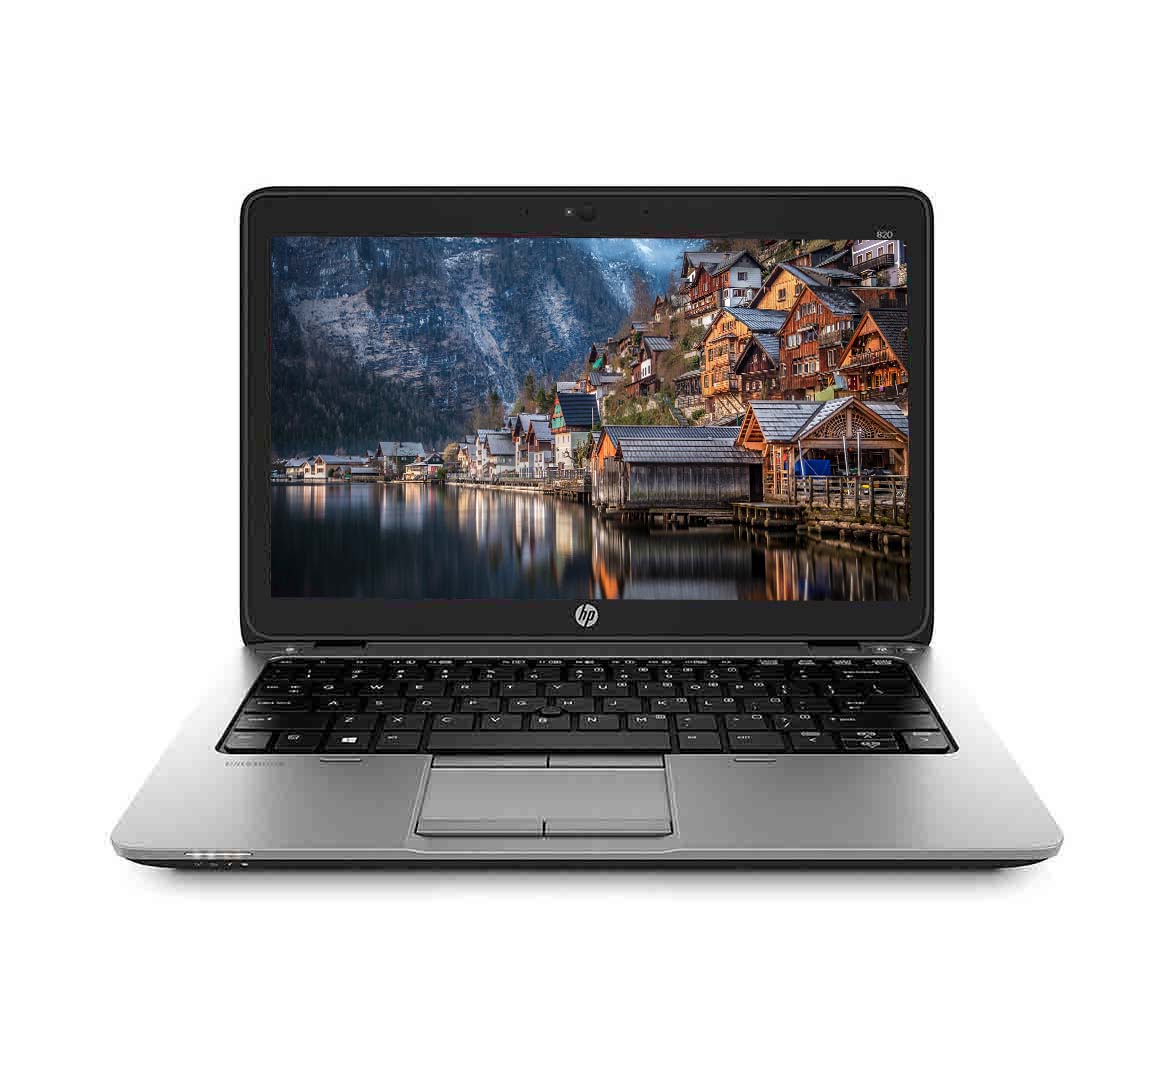 HP EliteBook 820 G1 Business Laptop, Intel Core i3-4th Generation CPU, 8GB RAM, 500GB HDD, 12.5 inch Display, Windows 10 Pro, Refurbished Laptop